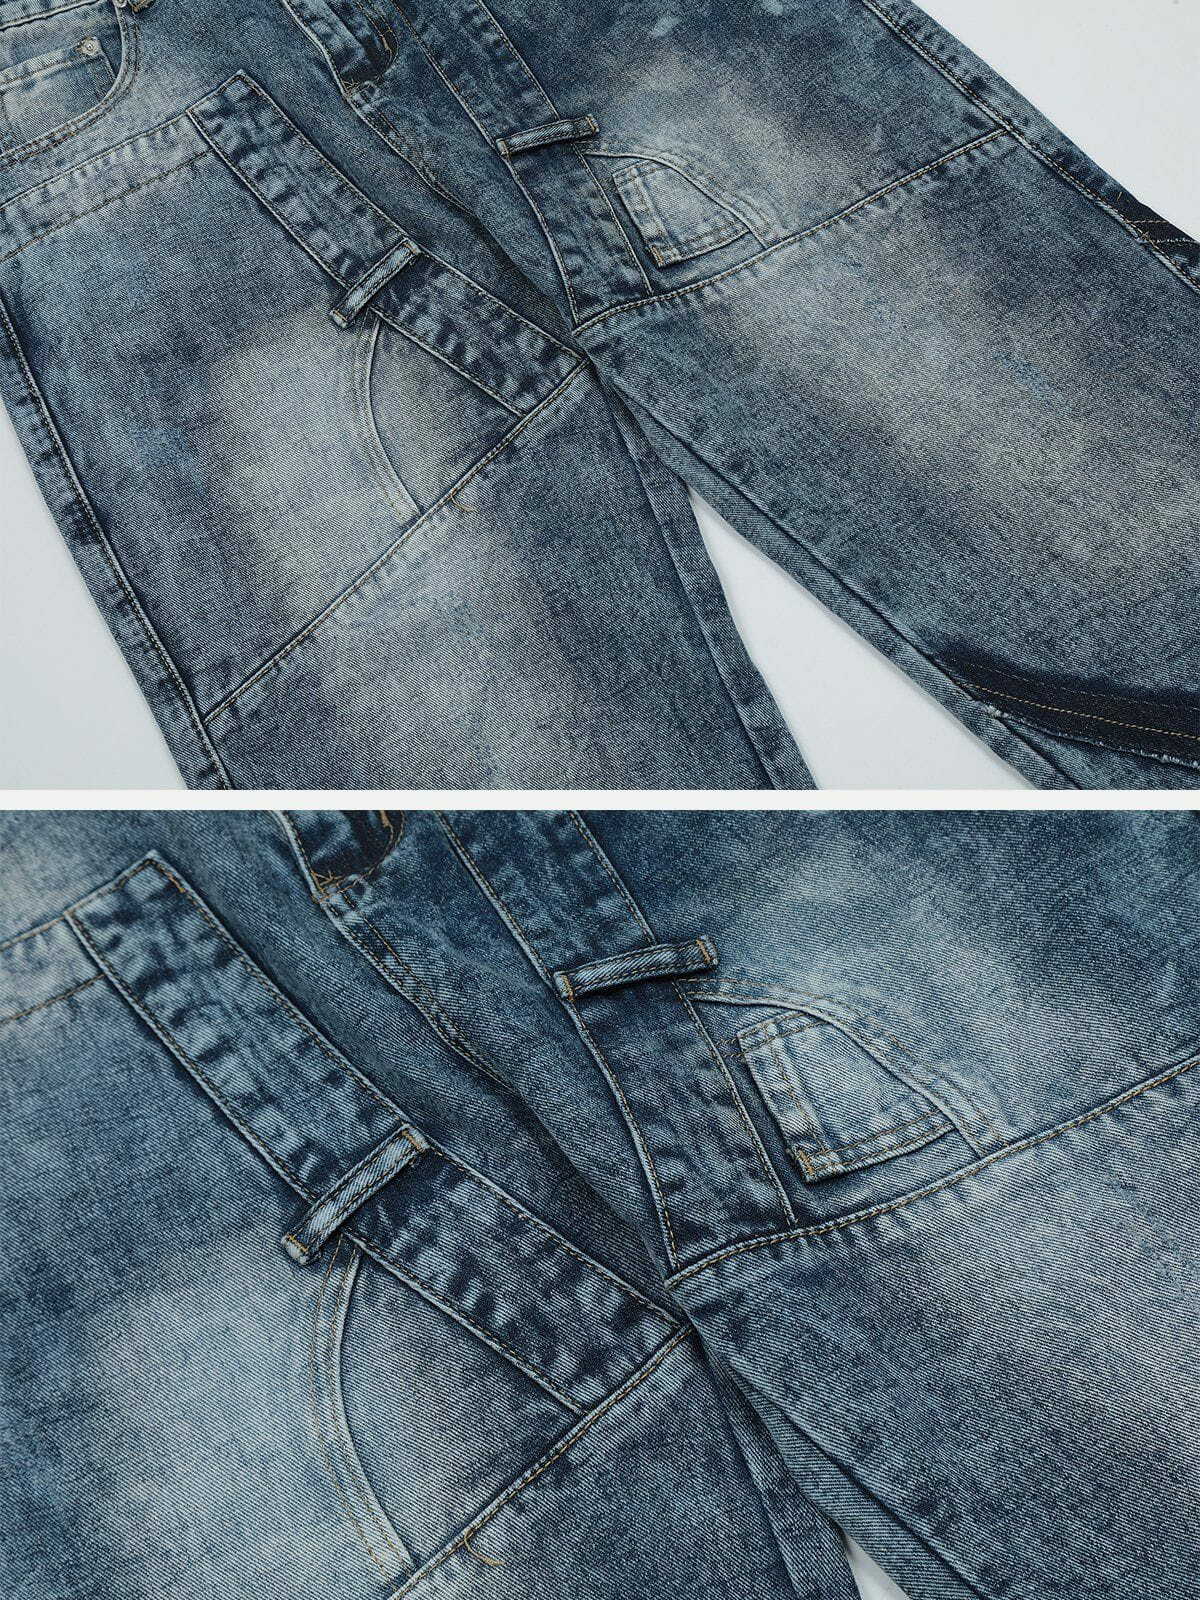 vibrant gradient jeans edgy & trendy streetwear 2309